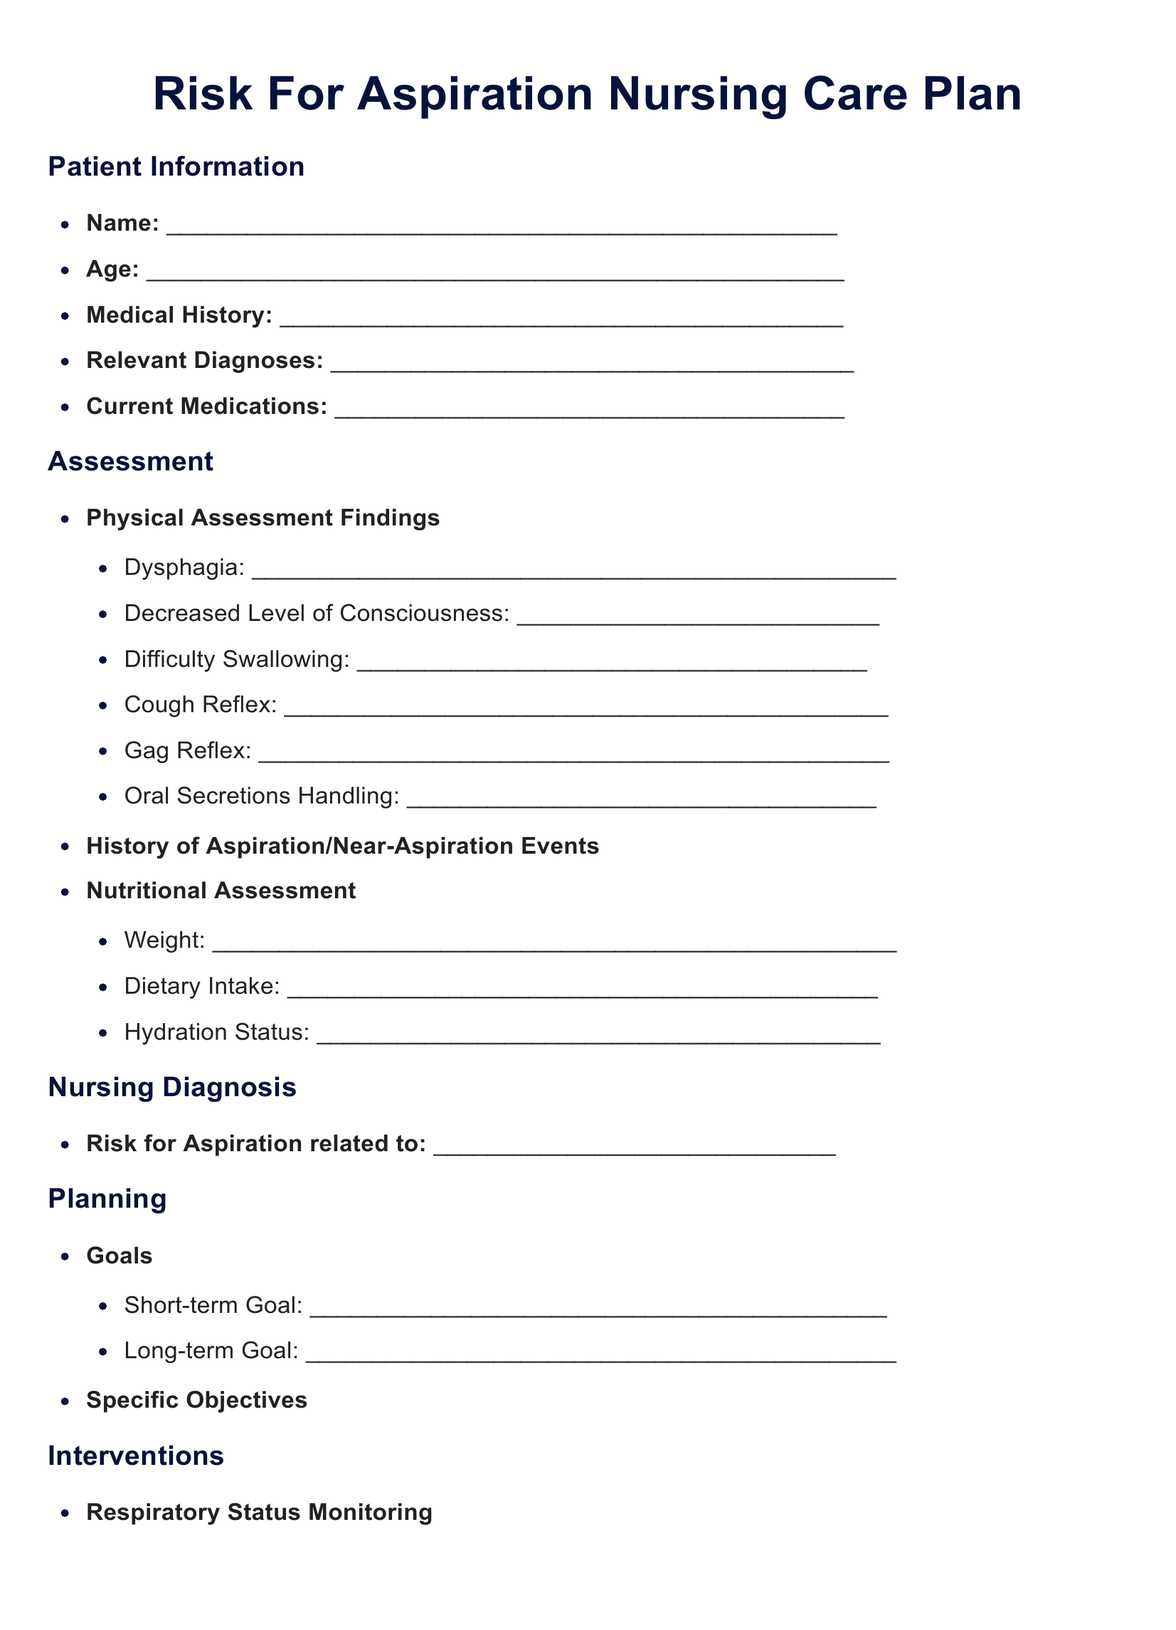 Risk For Aspiration Nursing Care Plan PDF Example